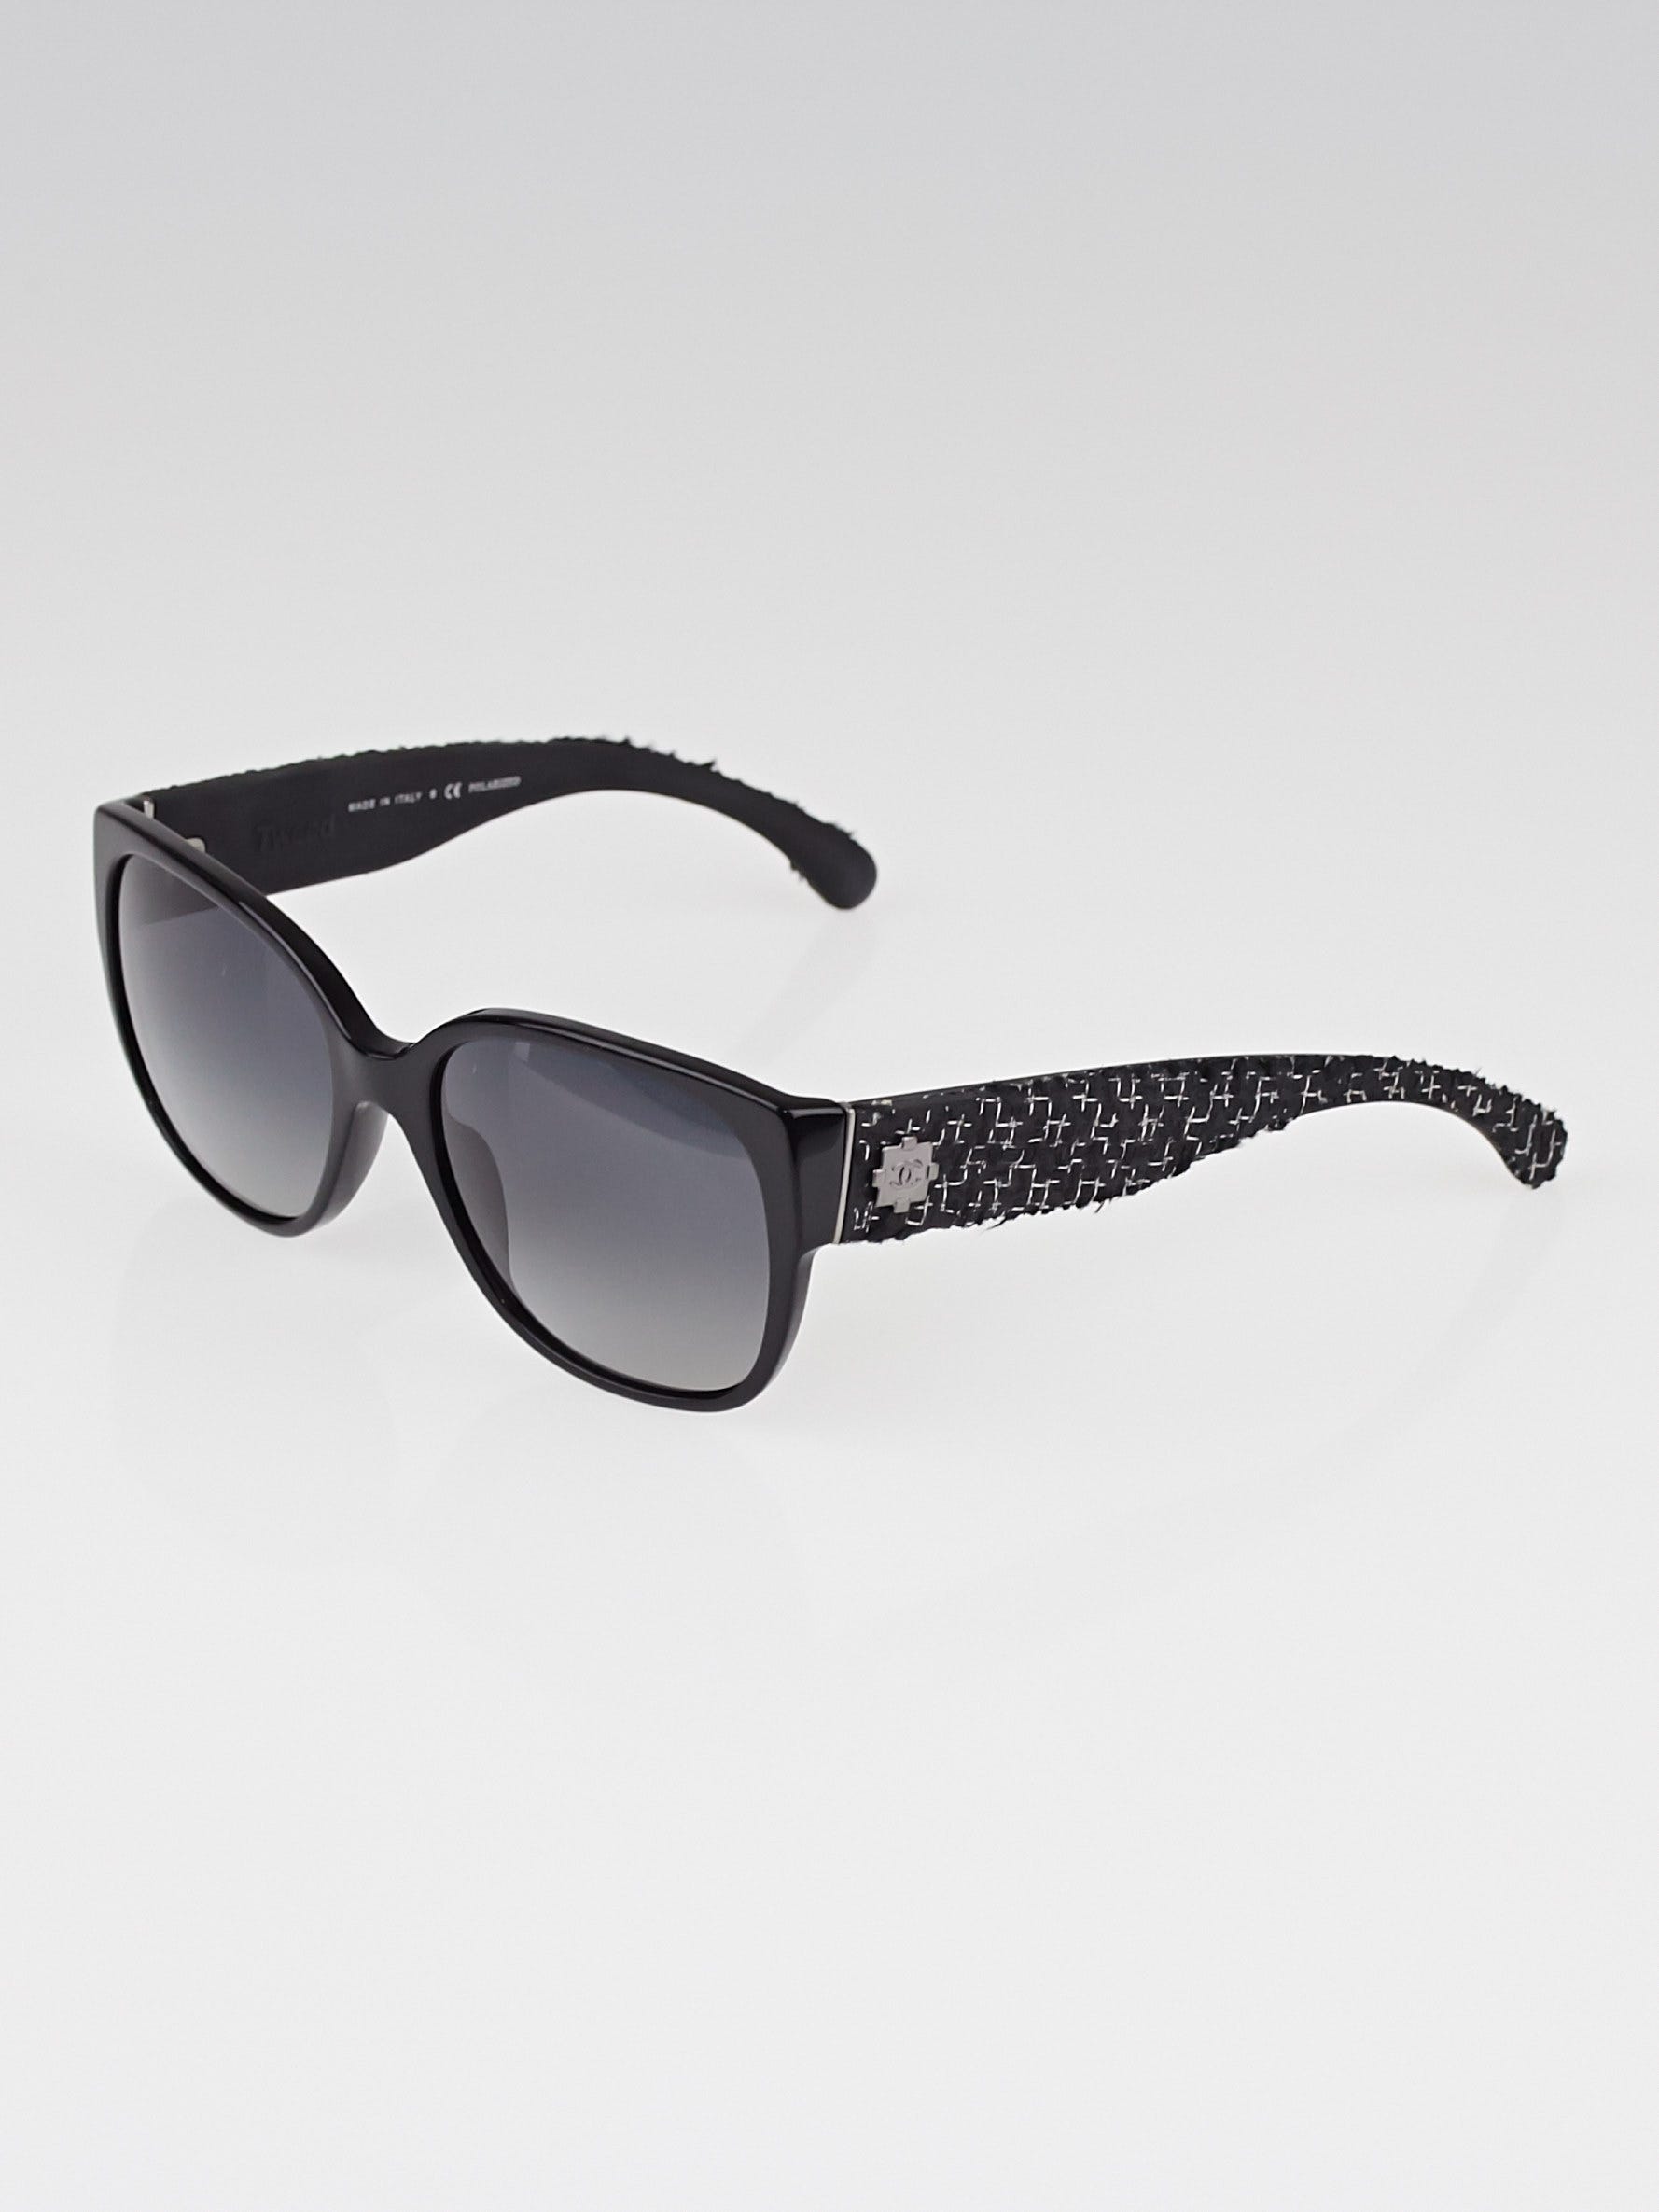 Chanel Designer Sunglasses 5237-1390